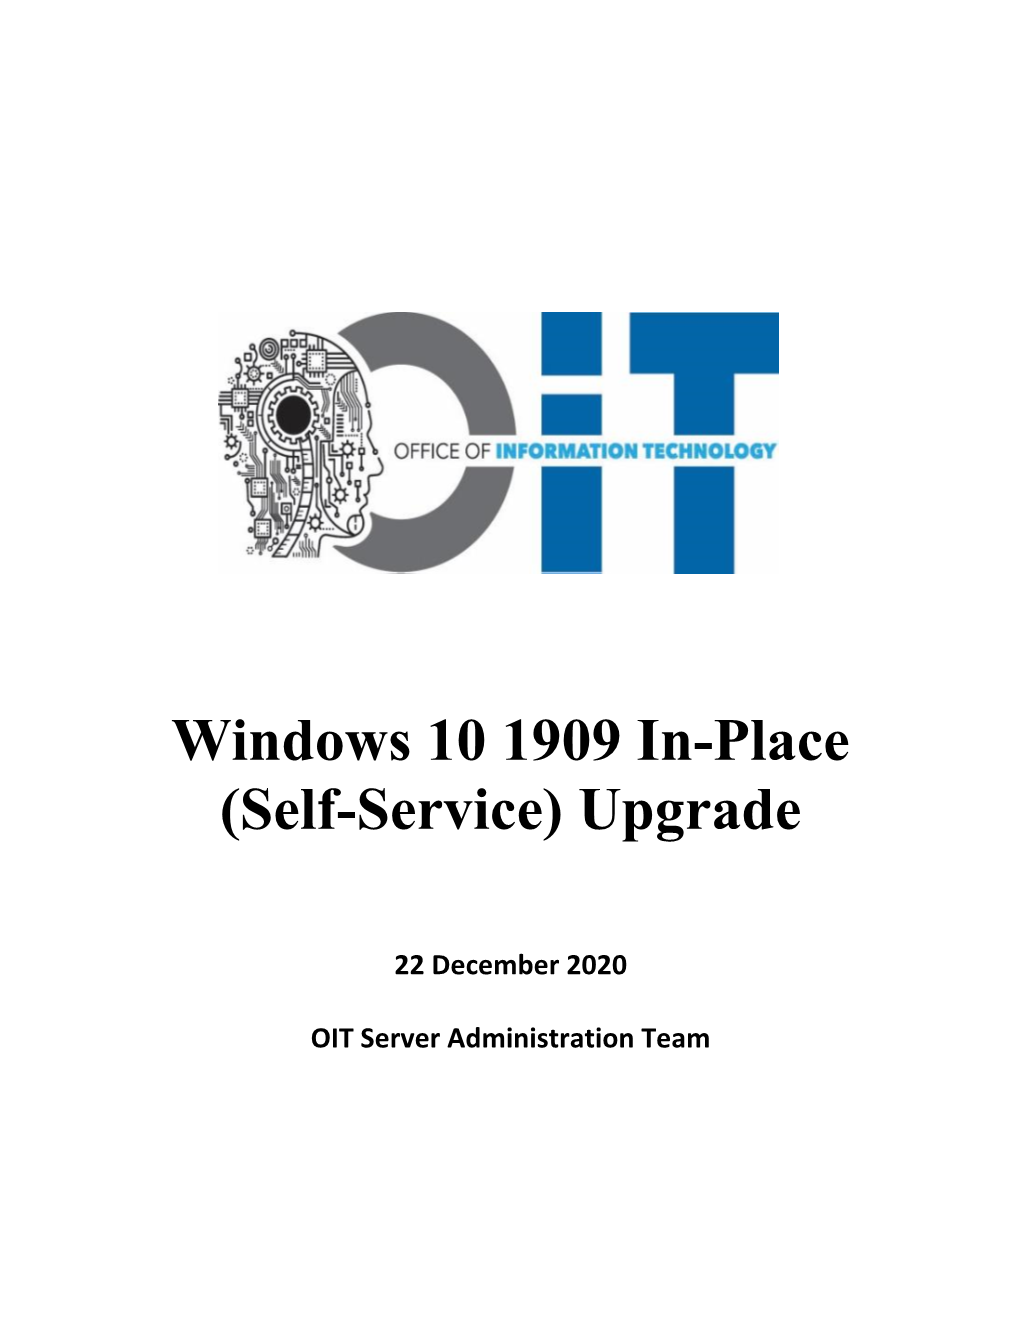 Windows 10 1909 In-Place (Self-Service) Upgrade